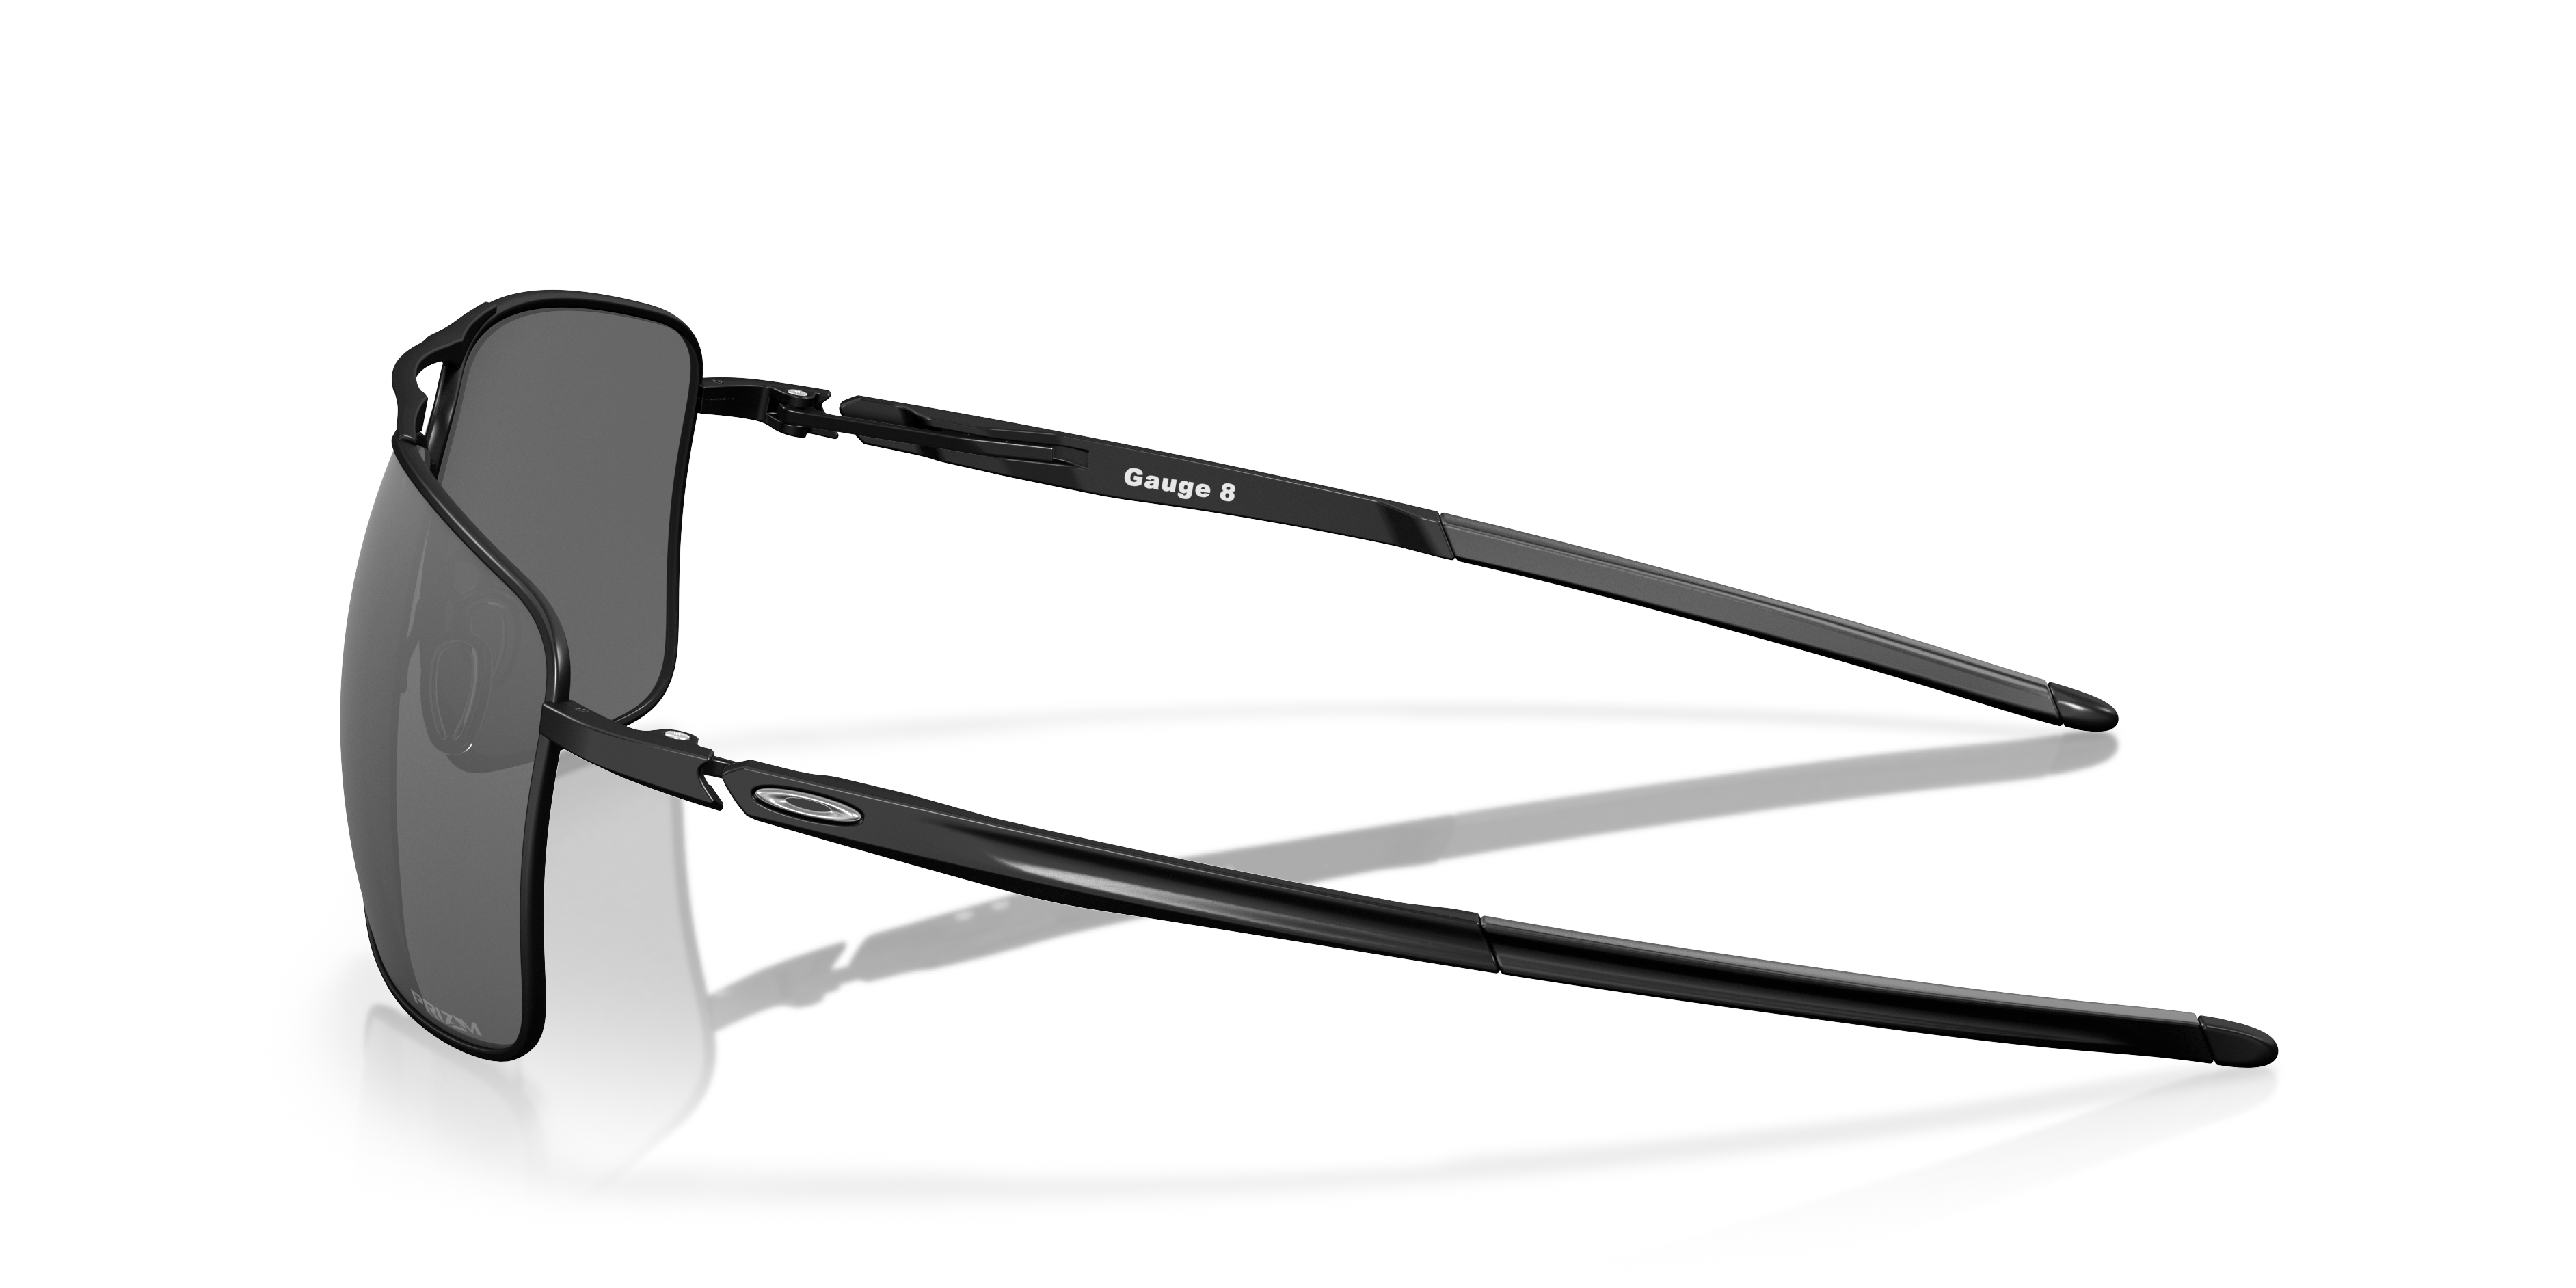 Angle_Left02 Oakley Gauge 8 OO 4124 (412402) Sunglasses Grey / Black